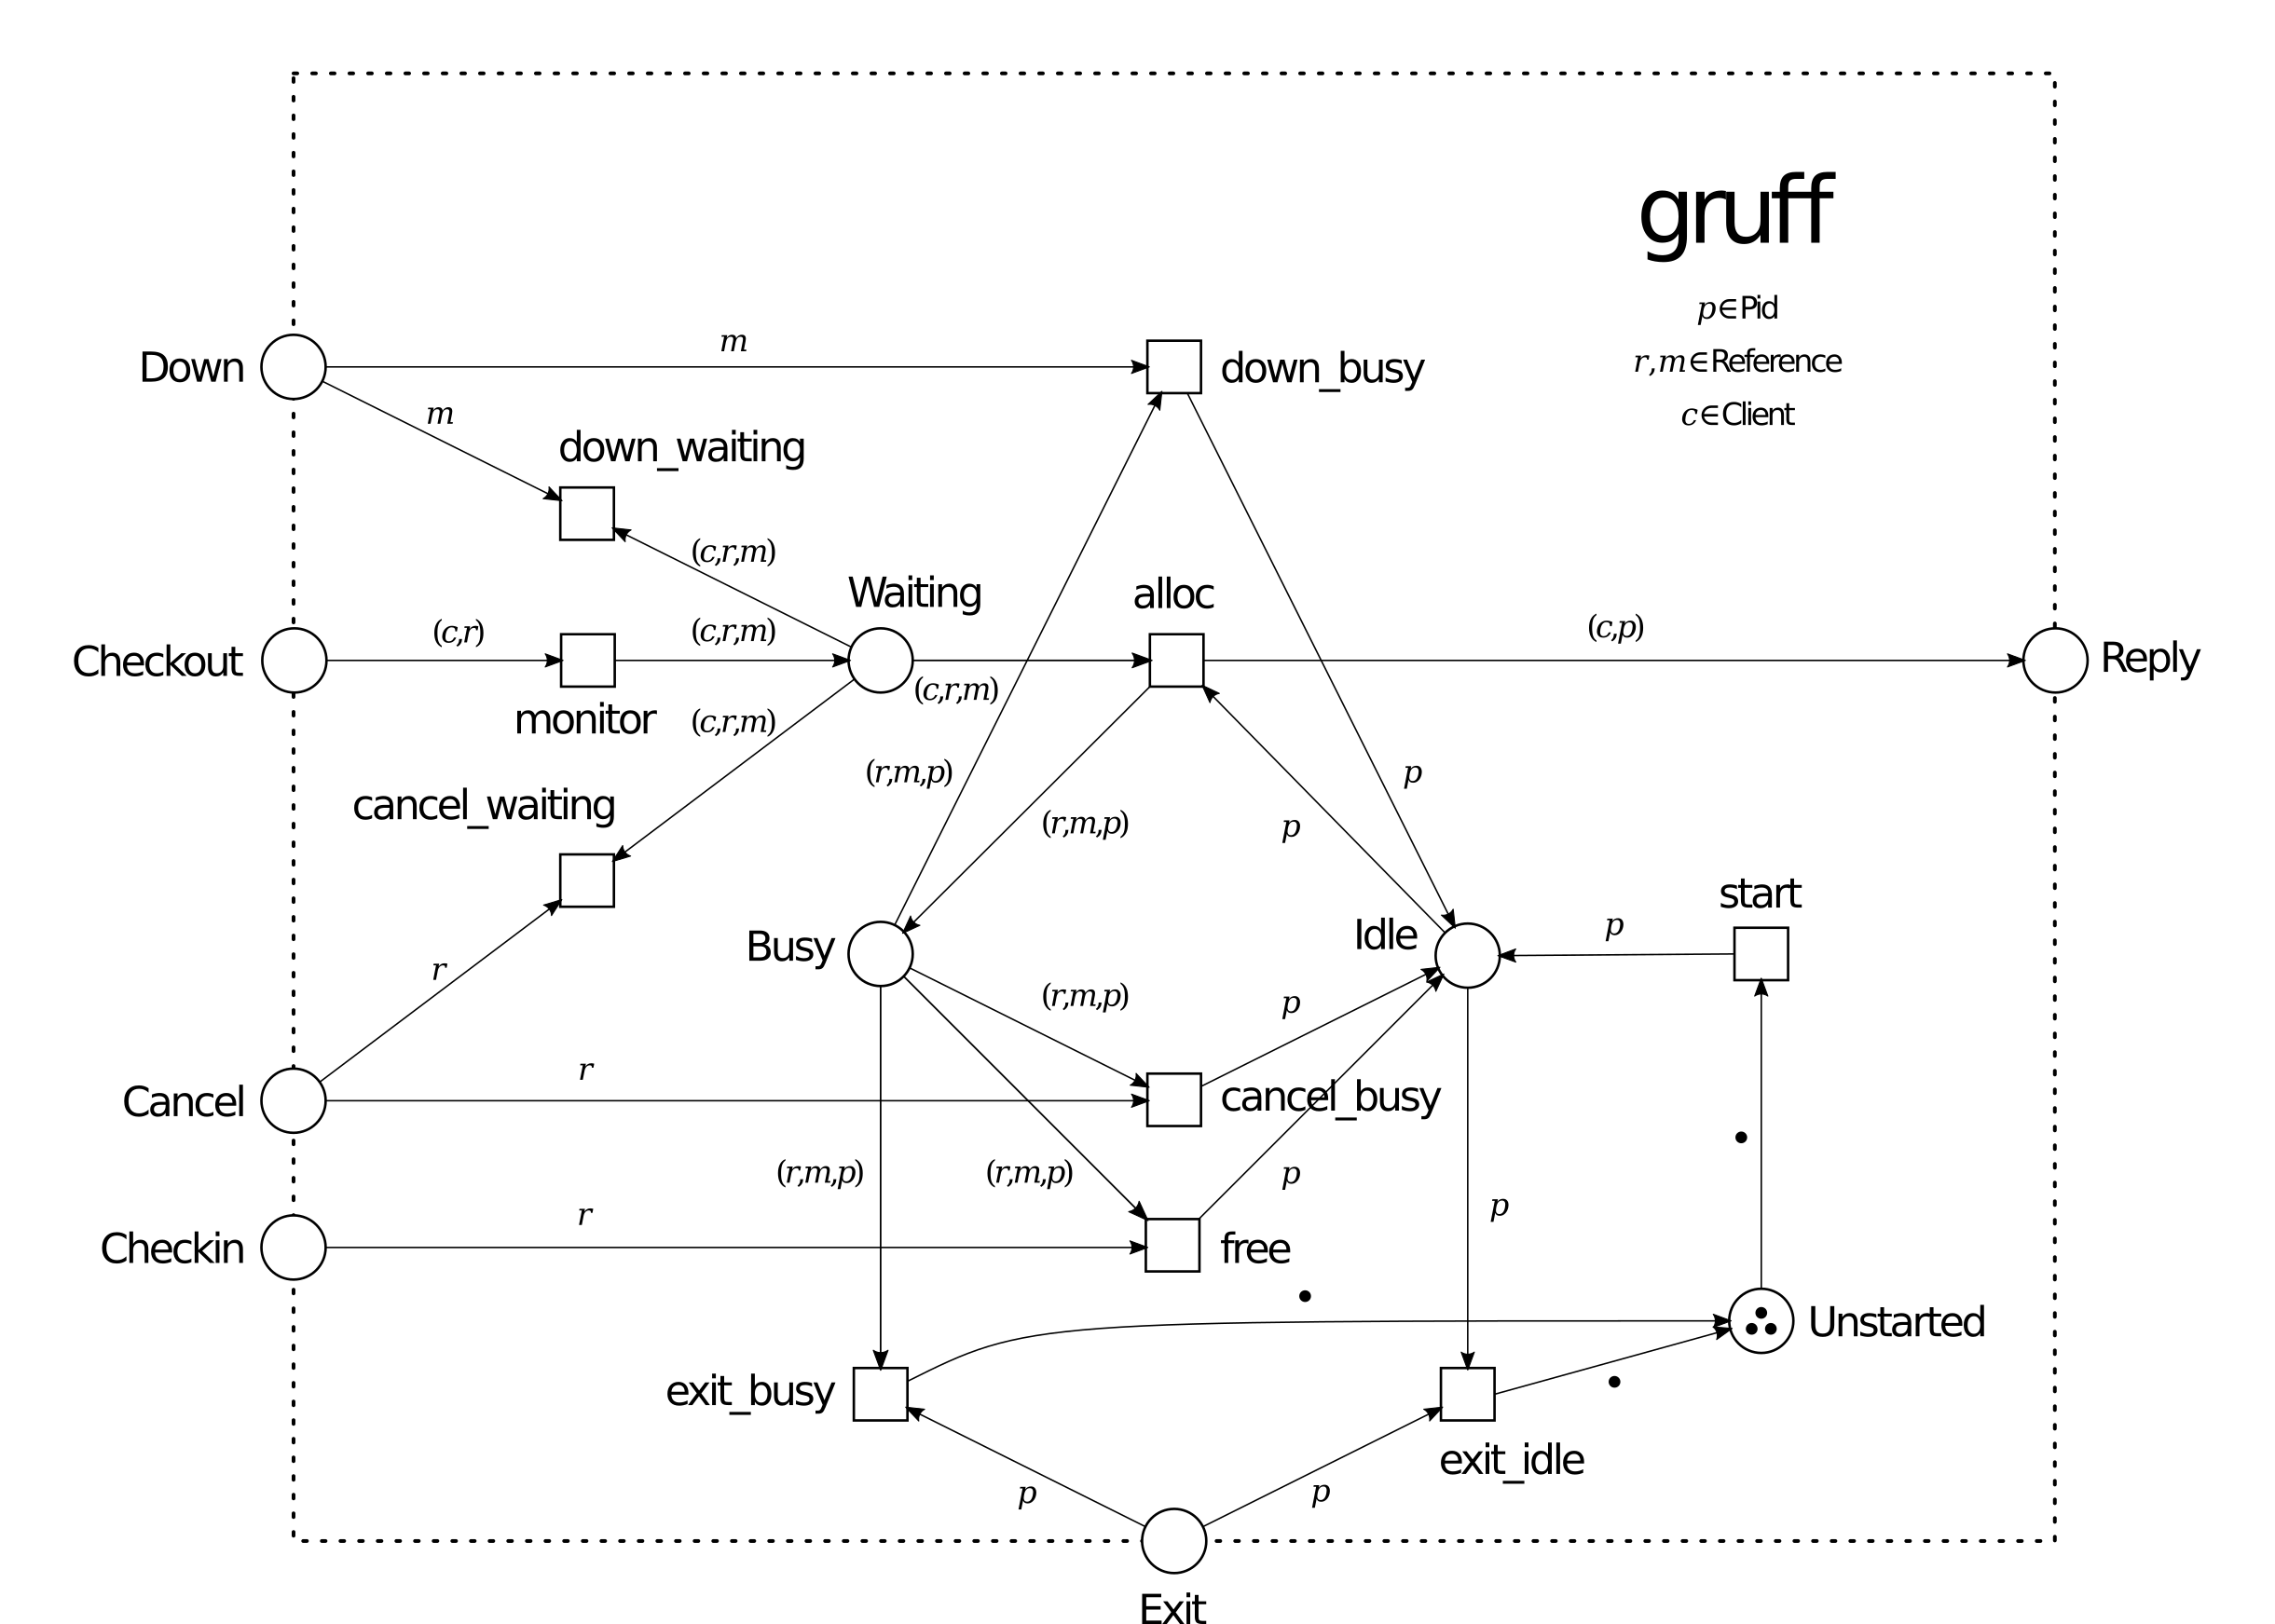 gruff Petri net model